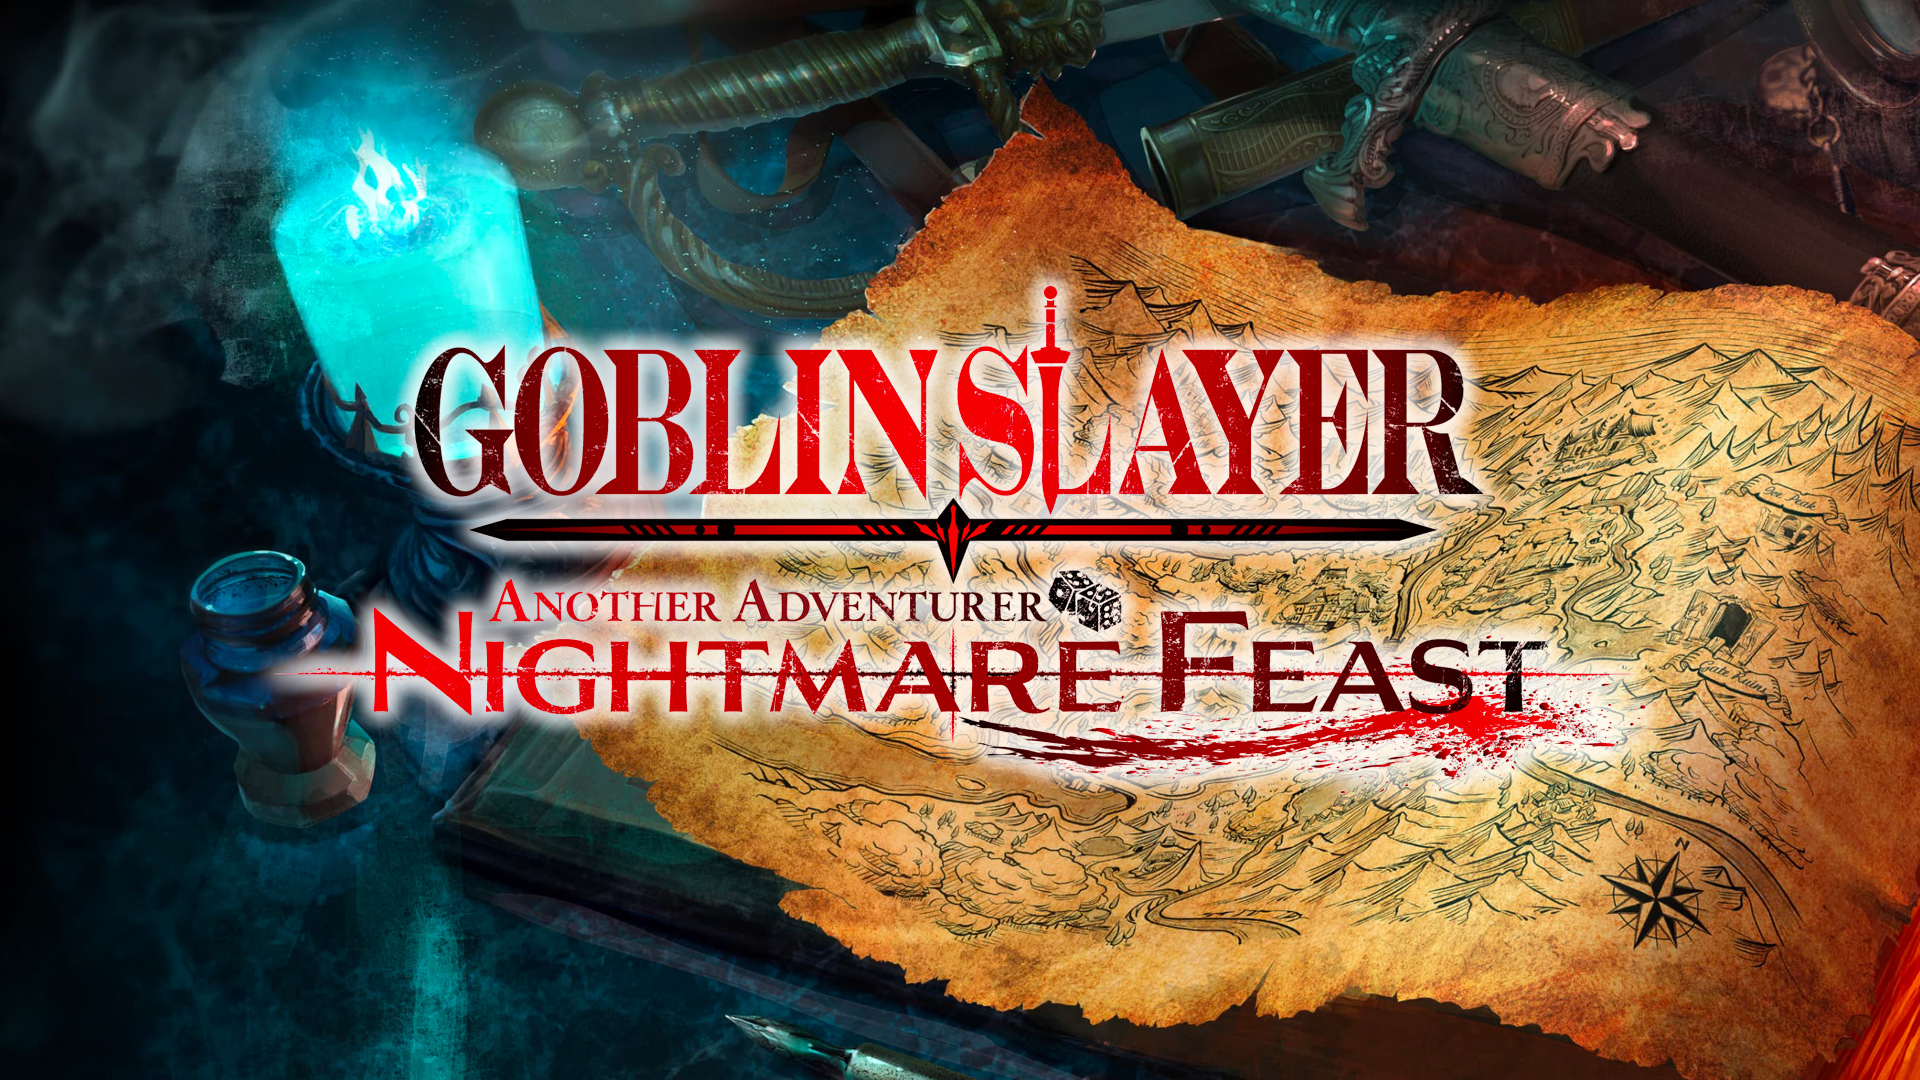 Goblin Slayer Another Adventurer: Nightmare Feast second trailer